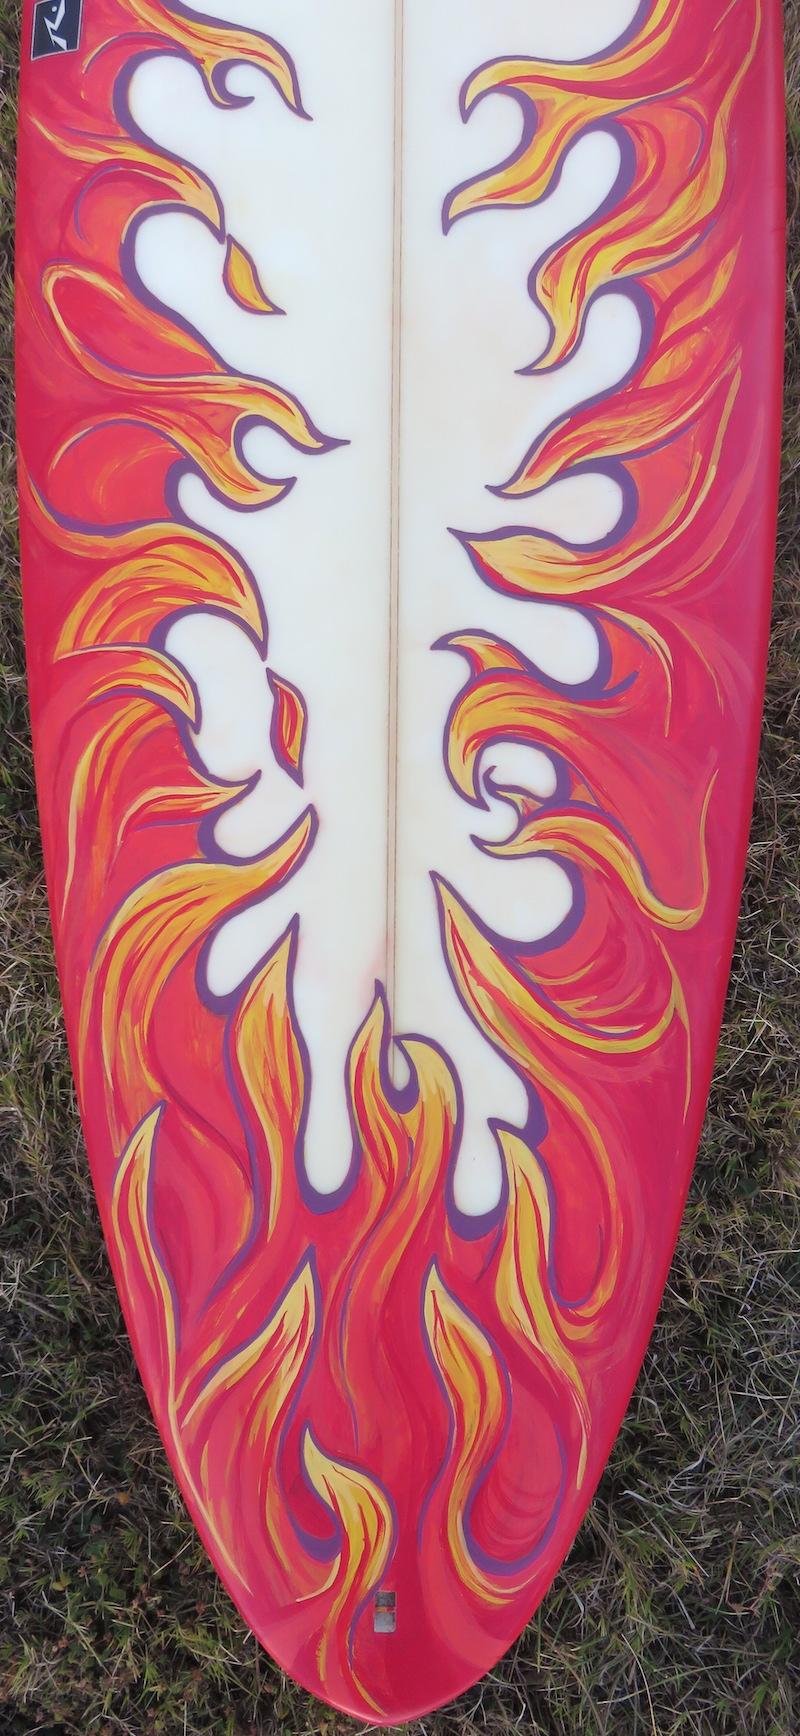 American World Champion Derek Ho Personal Surfboard by Rusty Preisendorfer